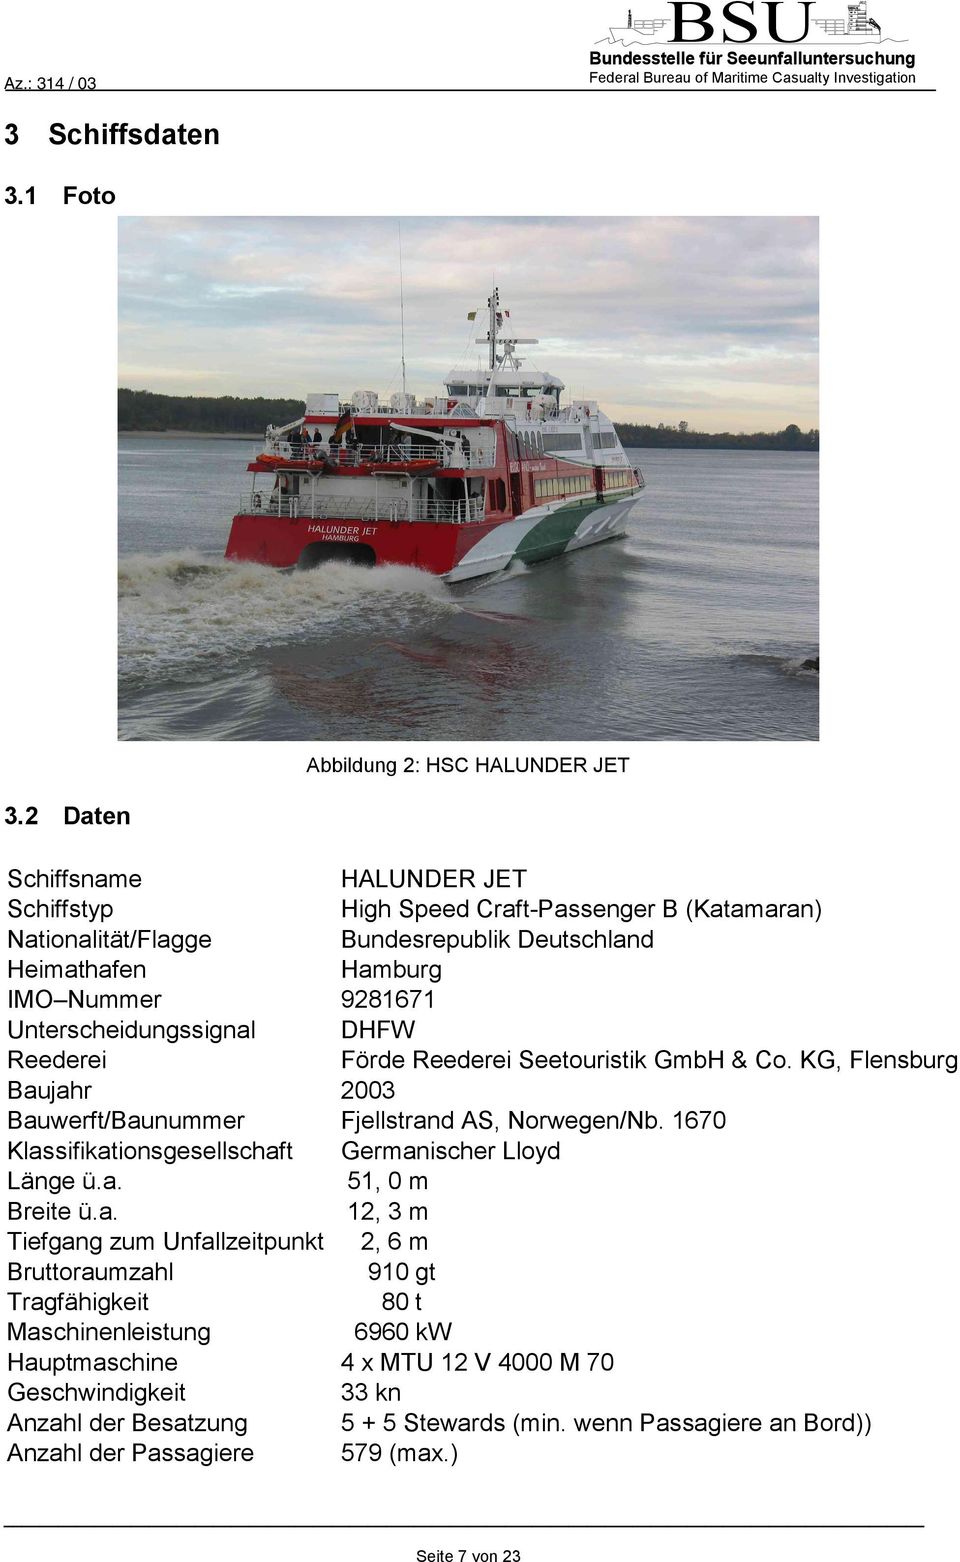 Unterscheidungssignal DHFW Reederei Förde Reederei Seetouristik GmbH & Co. KG, Flensburg Baujahr 2003 Bauwerft/Baunummer Fjellstrand AS, Norwegen/Nb.